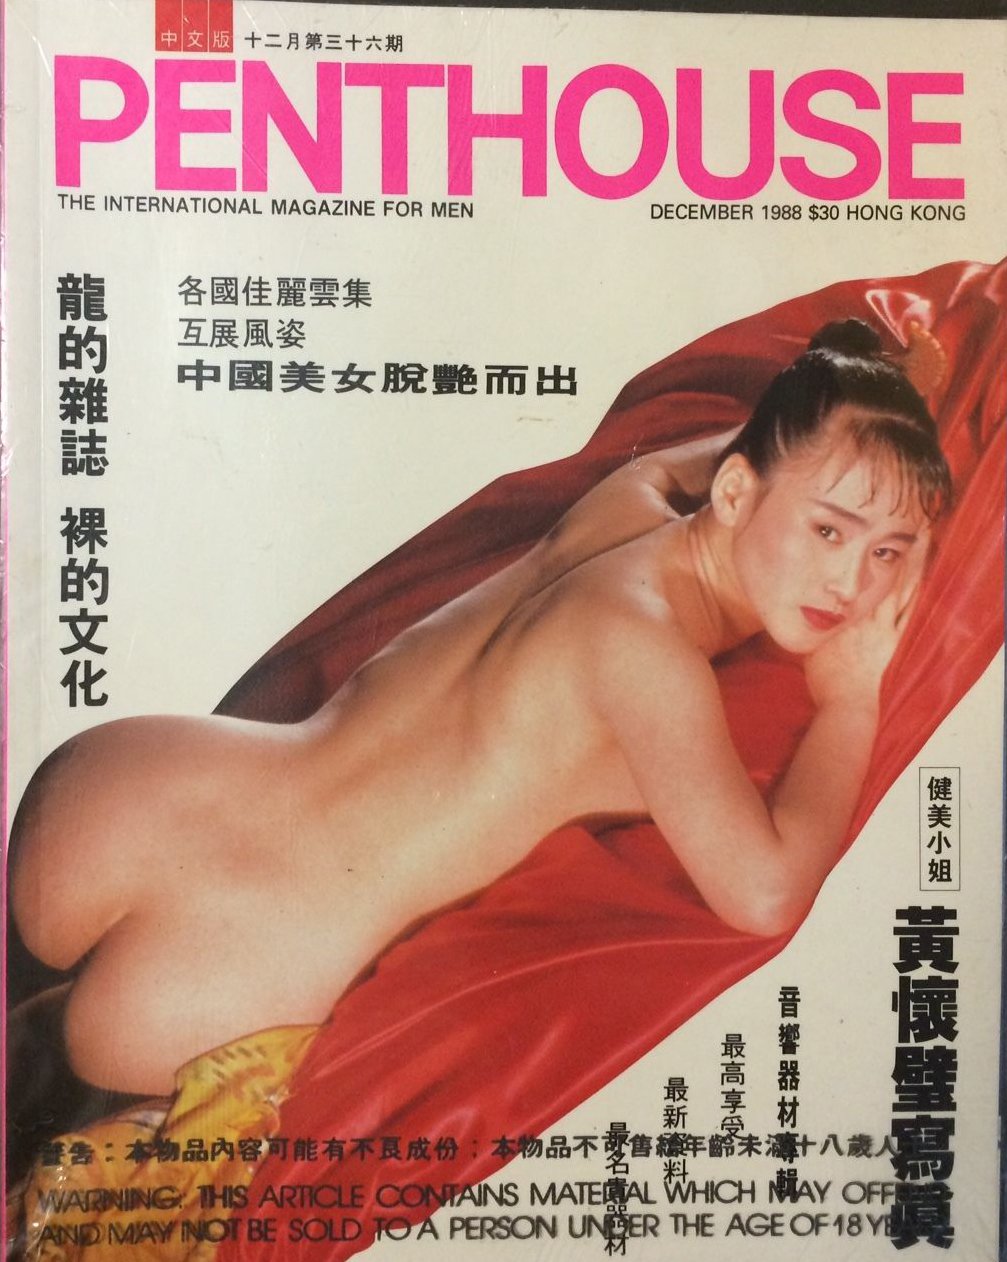 Penthouse (Hong Kong) December 1988 magazine back issue Penthouse (Hong Kong) magizine back copy Penthouse (Hong Kong) December 1988 Magazine Back Issue Published by Penthouse Publishing, Bob Guccione. The International Magazine For Men.